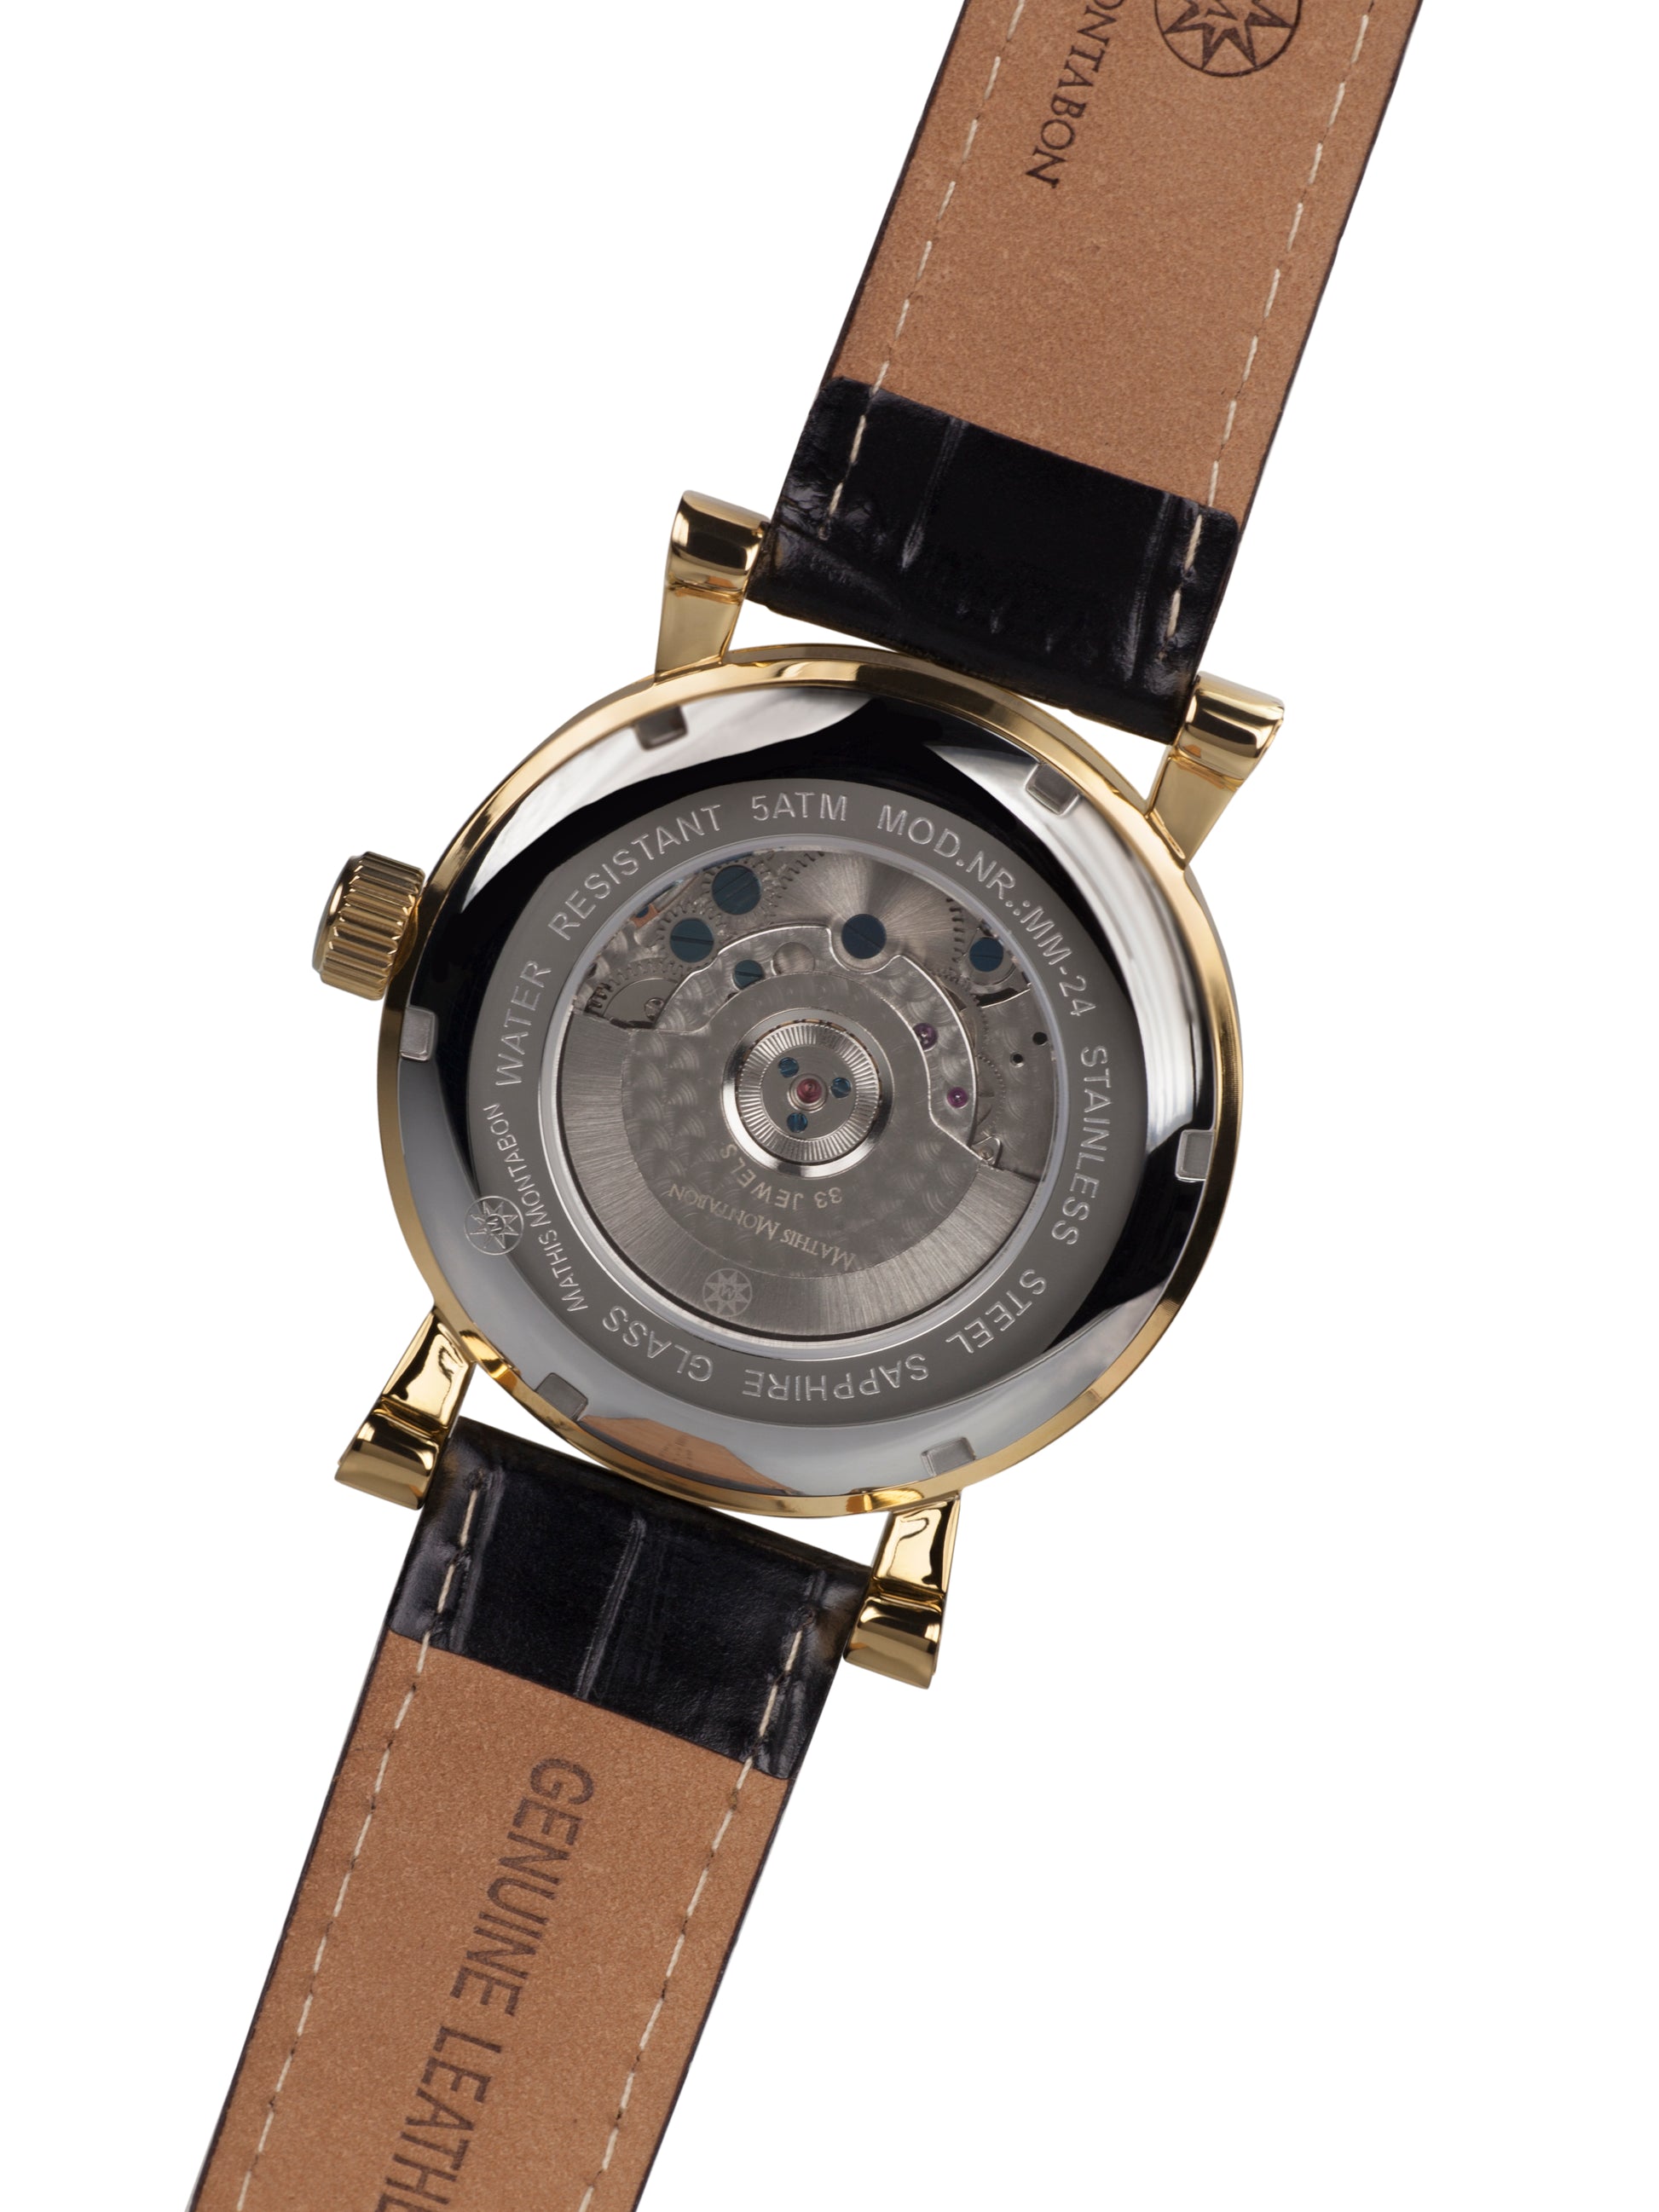 Automatic watches — Retrograde Date — Mathis Montabon — gold schwarz